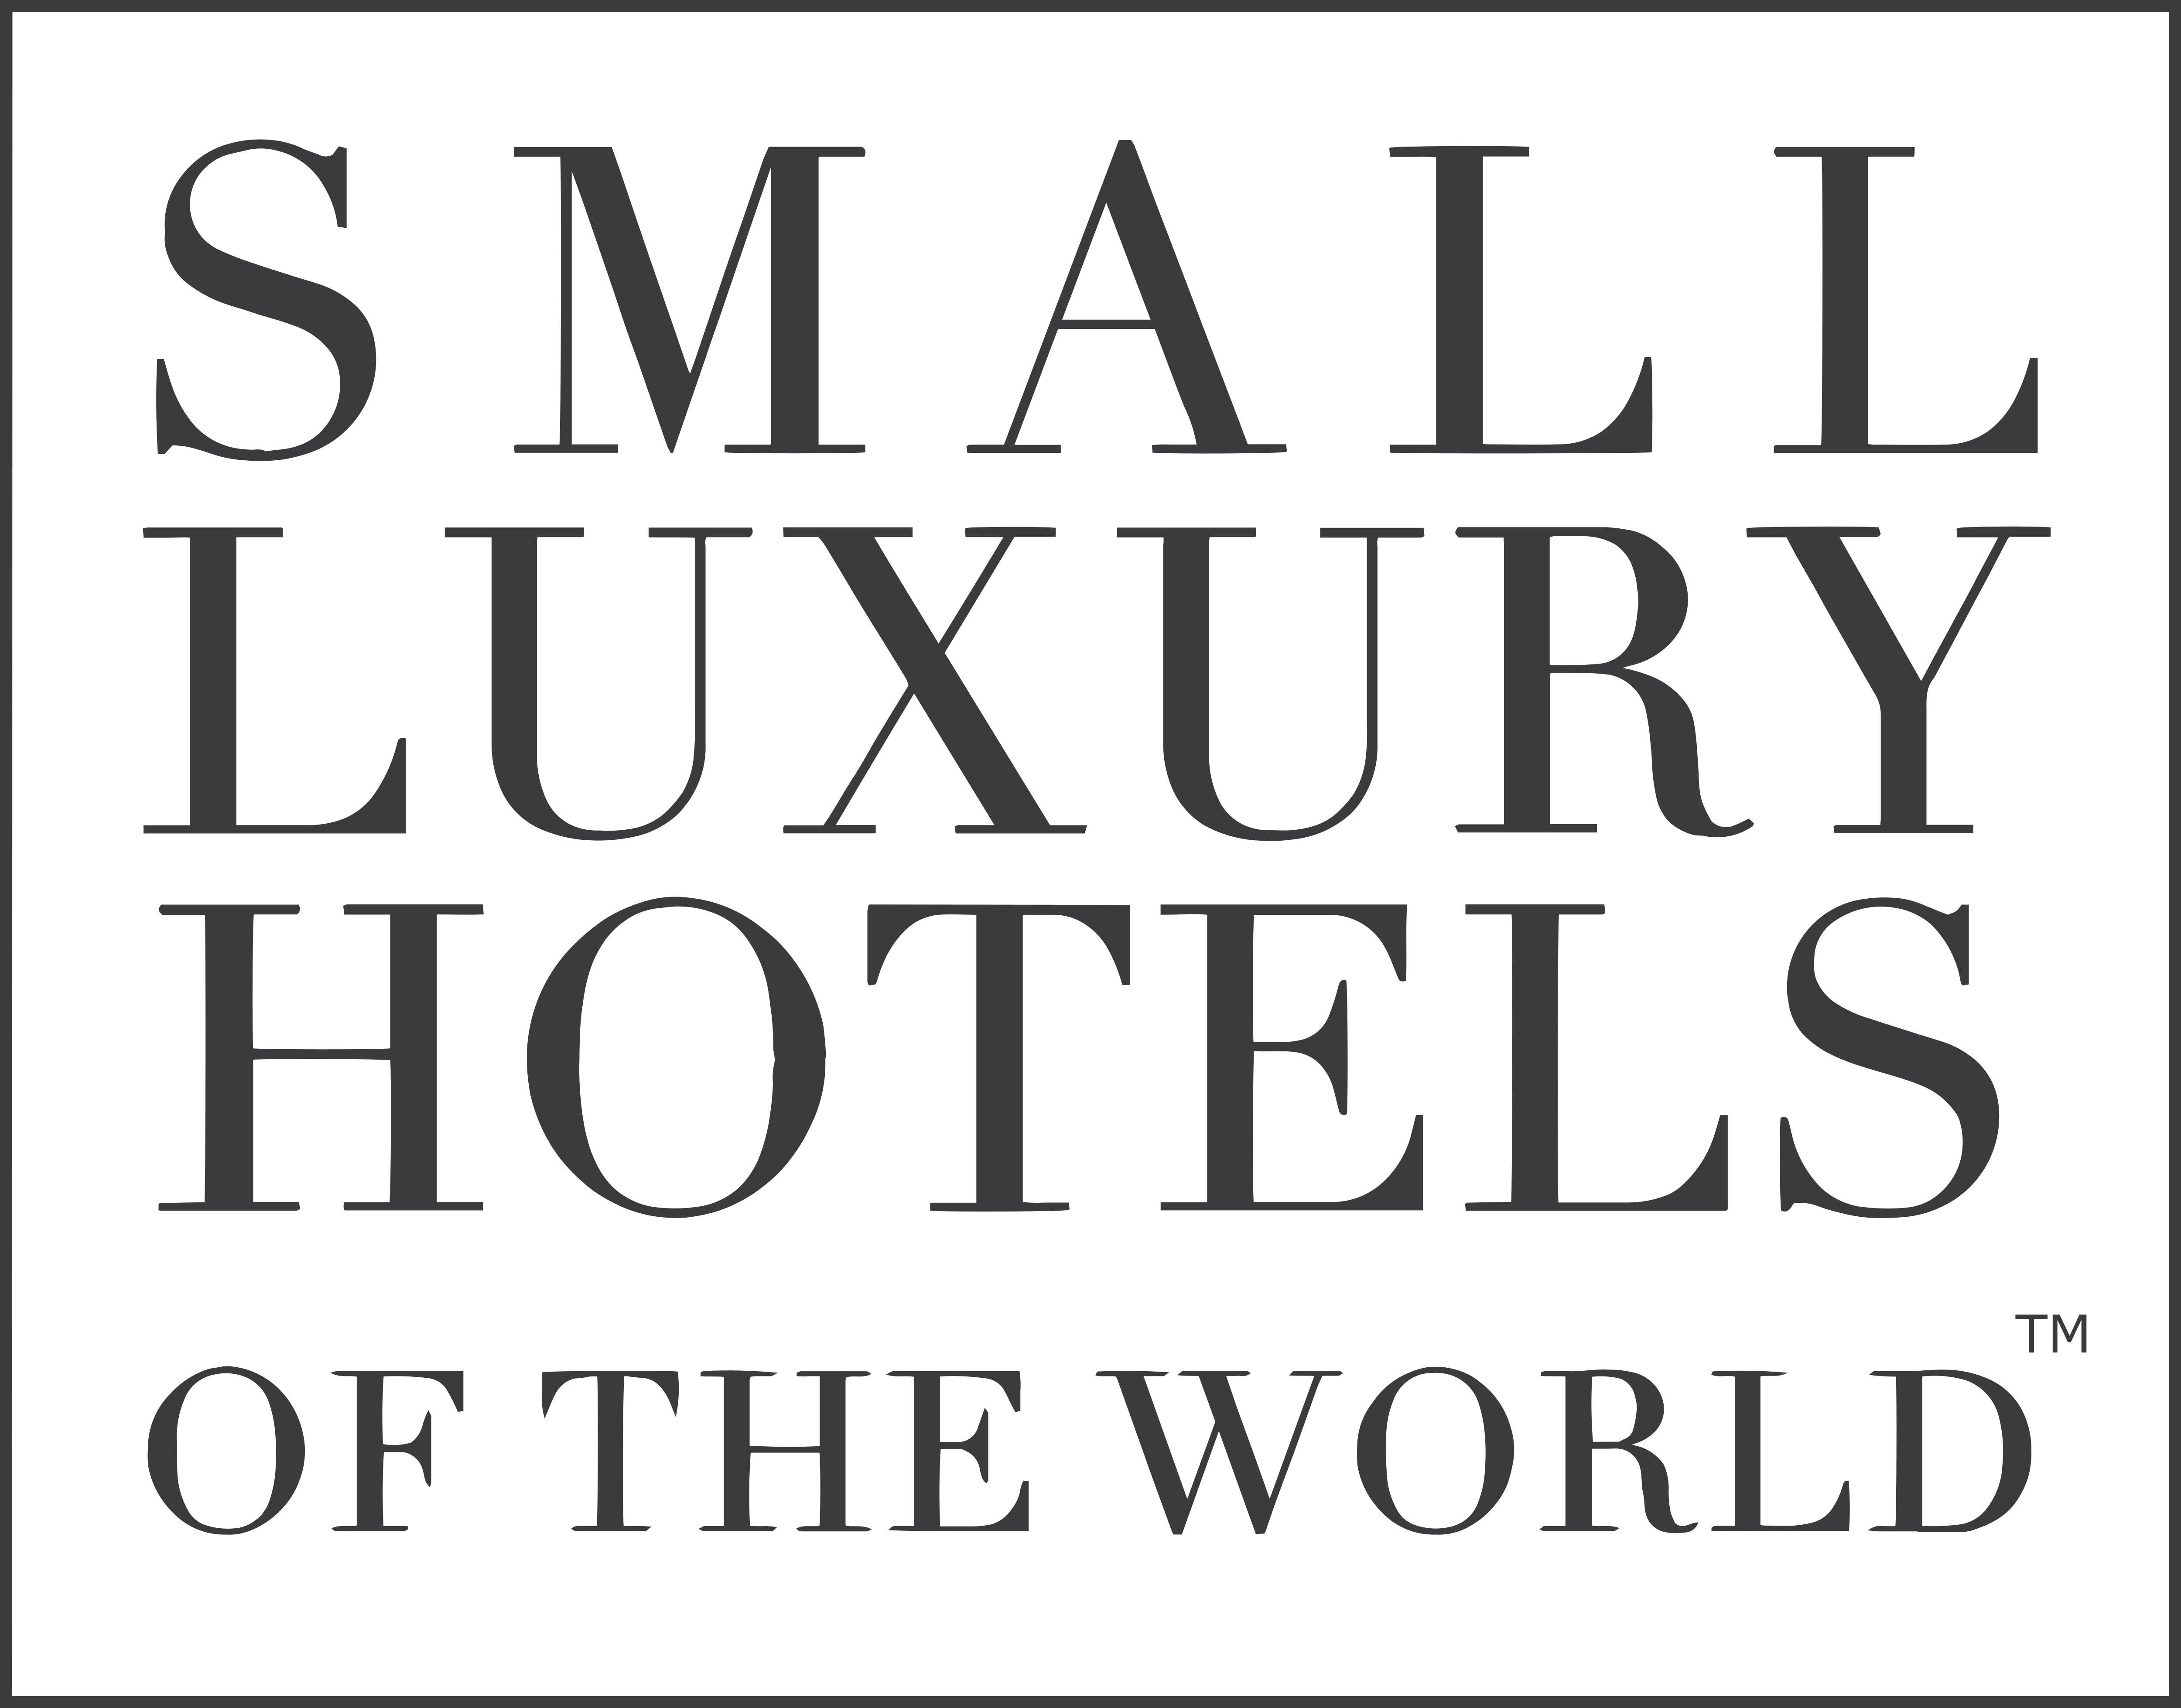 Details 147 Luxury Hotel Logos Vn